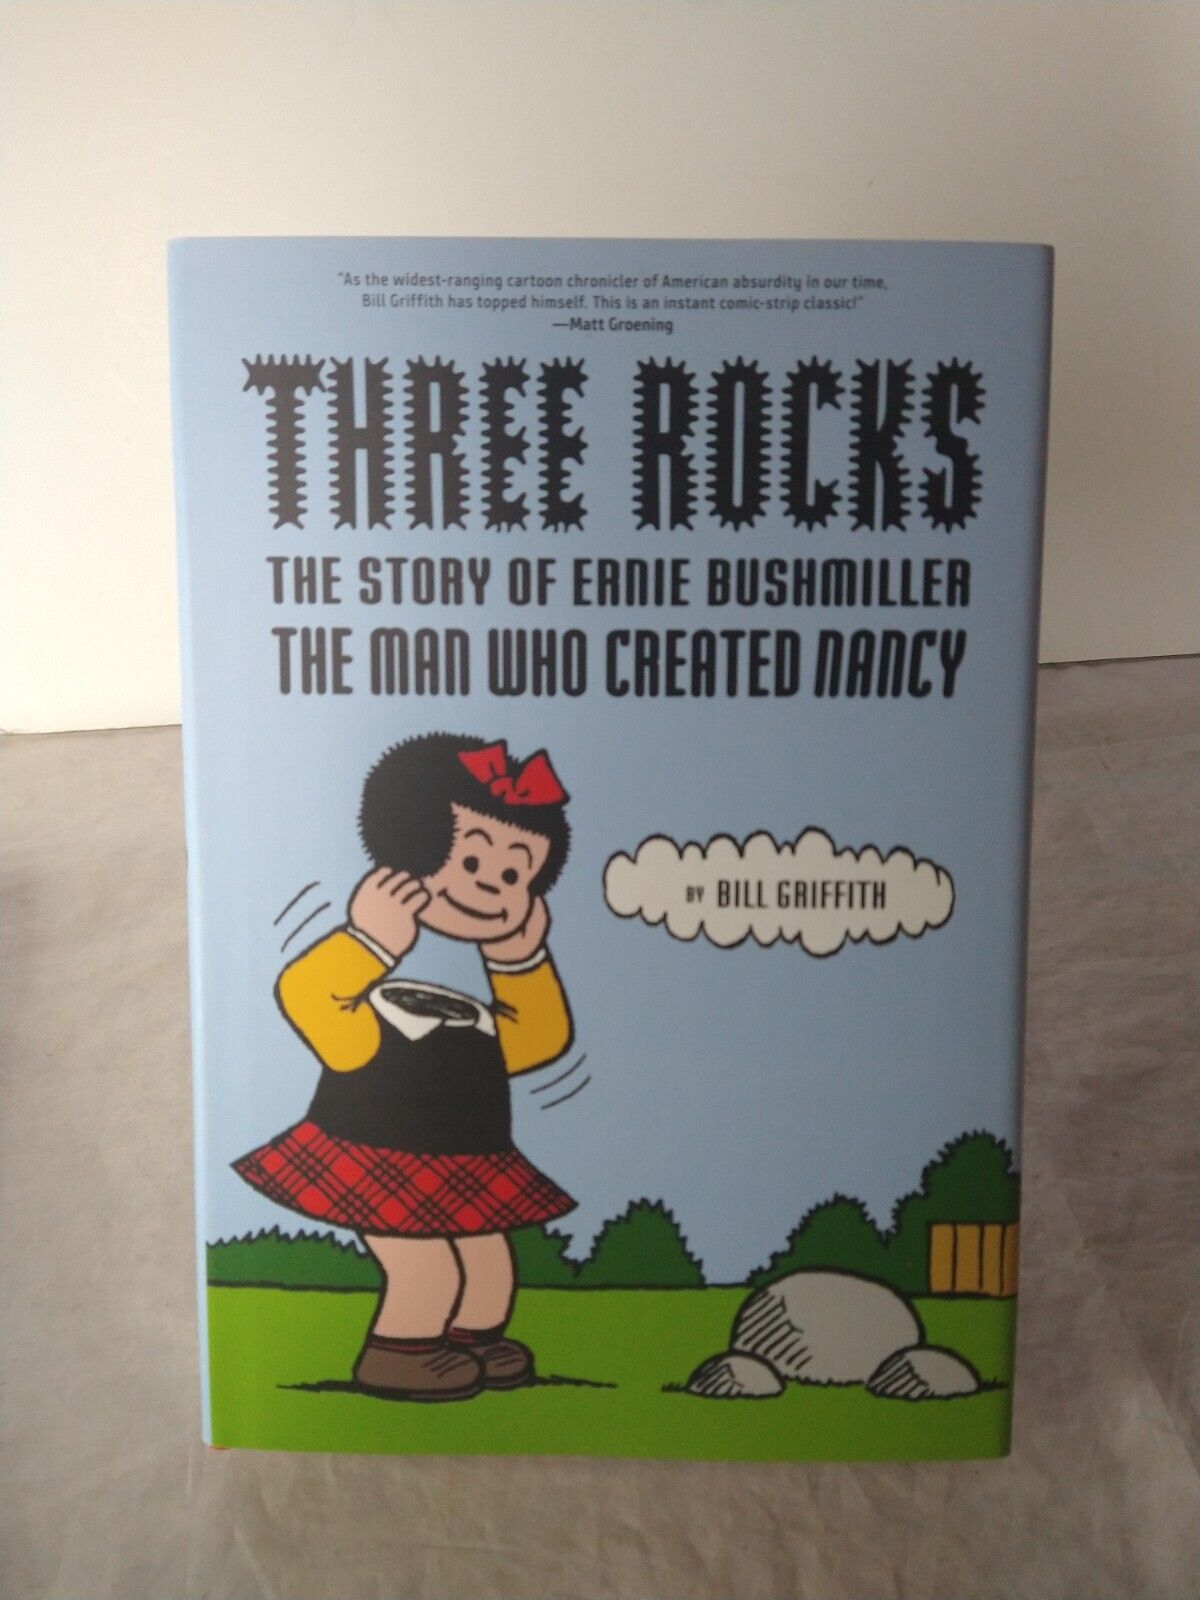 Three Rocks: The Story of Ernie Bushmiller, The Man Who Created Nancy